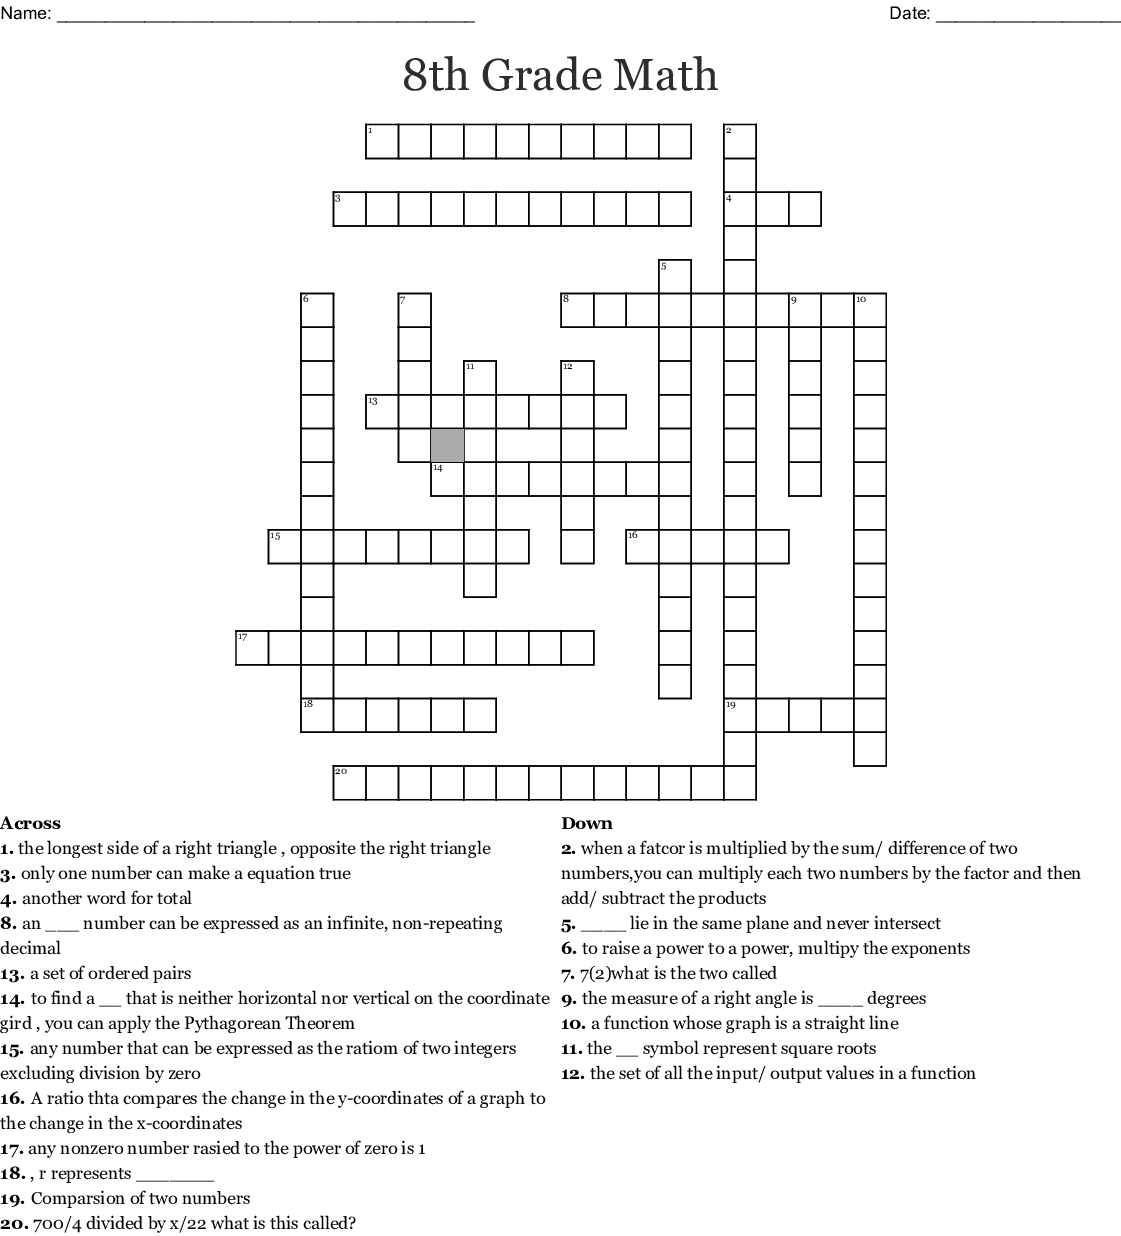 Crossword Puzzles Printable 8th Grade